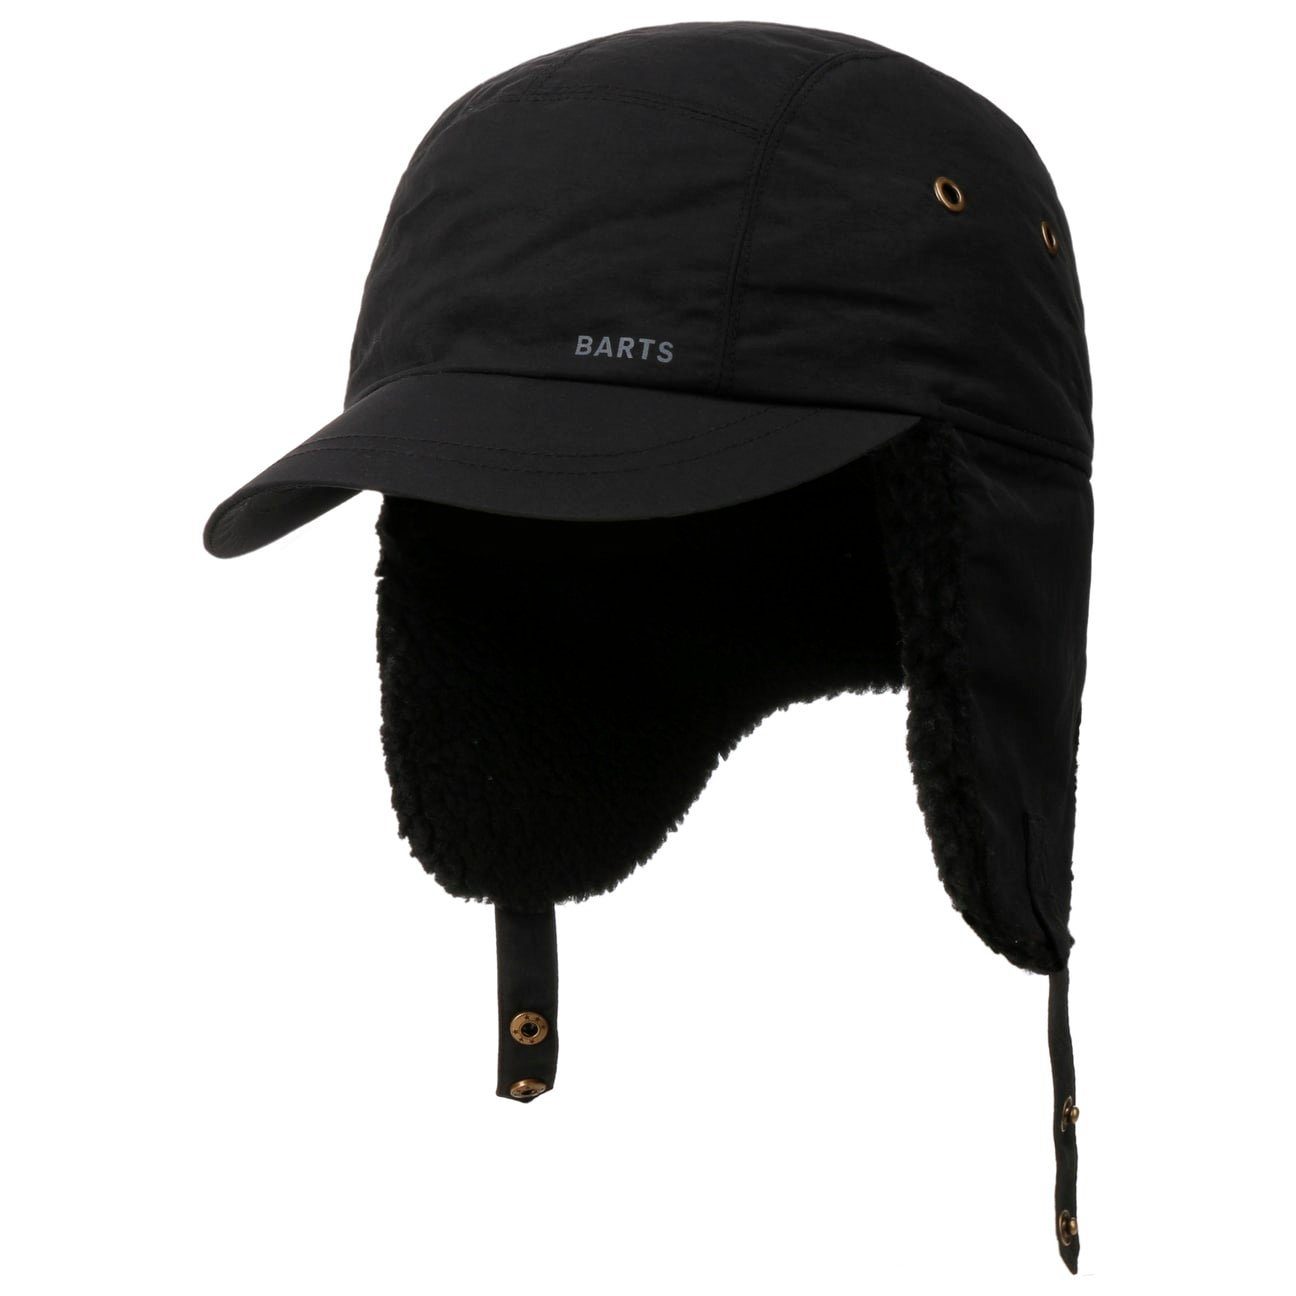 Barts Baseball Cap (1-St) schwarz Schirm mit Basecap